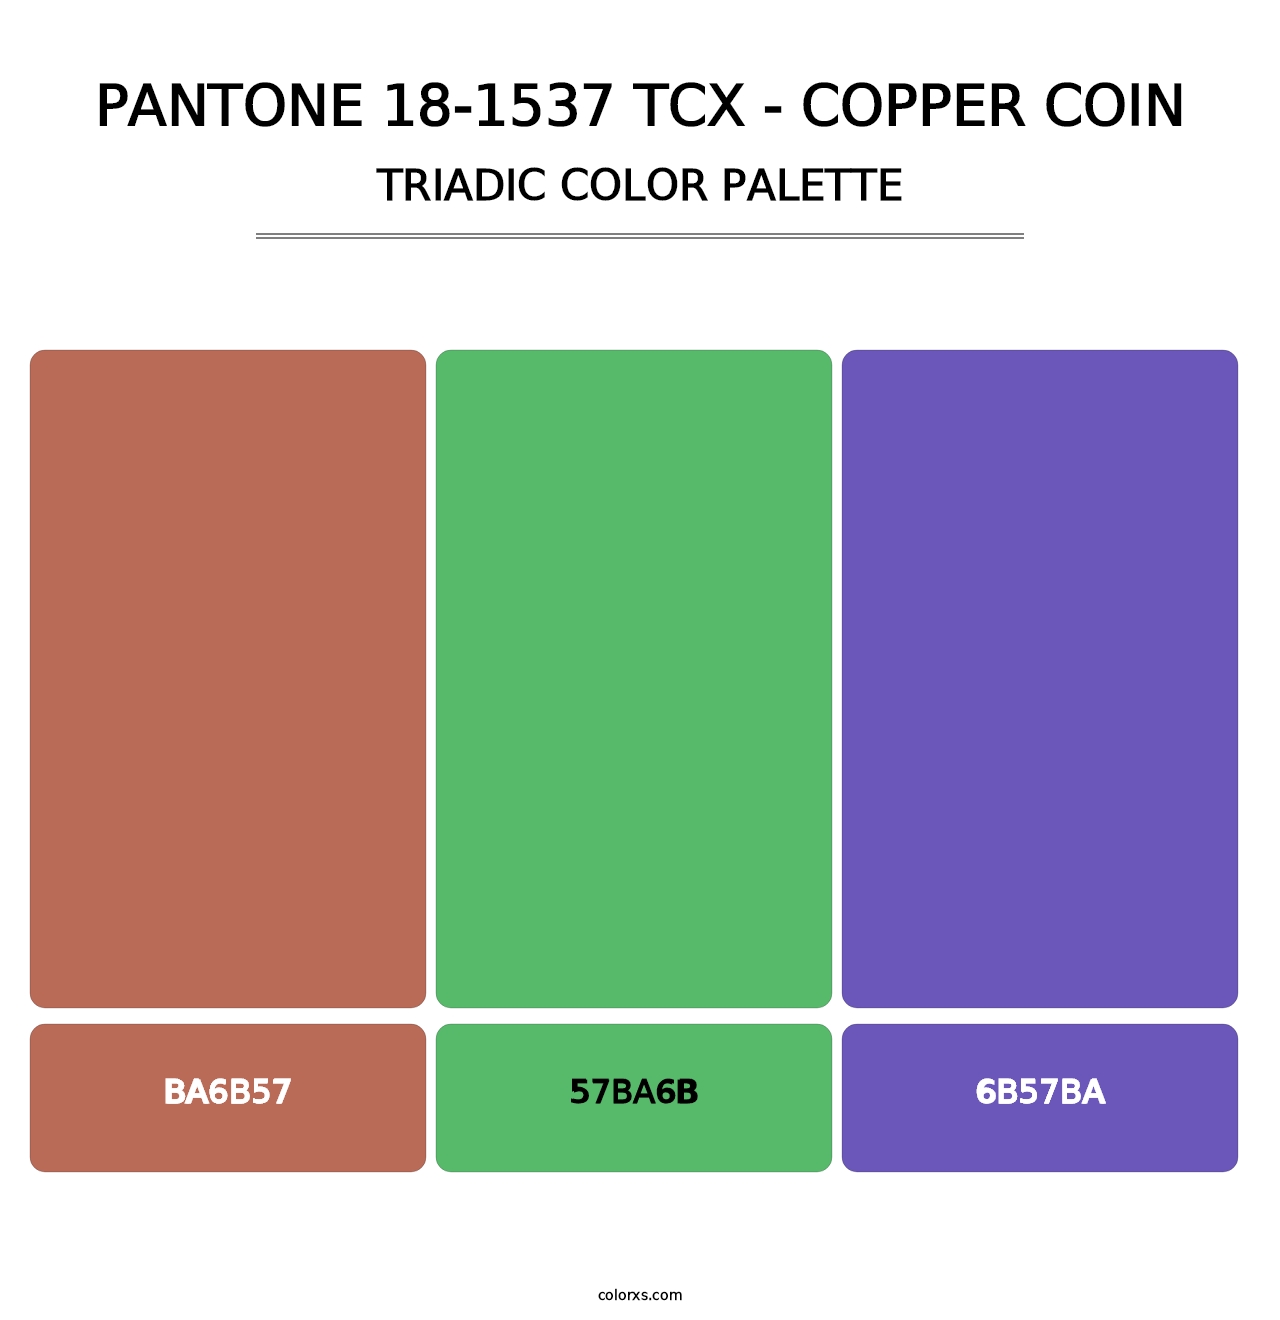 PANTONE 18-1537 TCX - Copper Coin - Triadic Color Palette